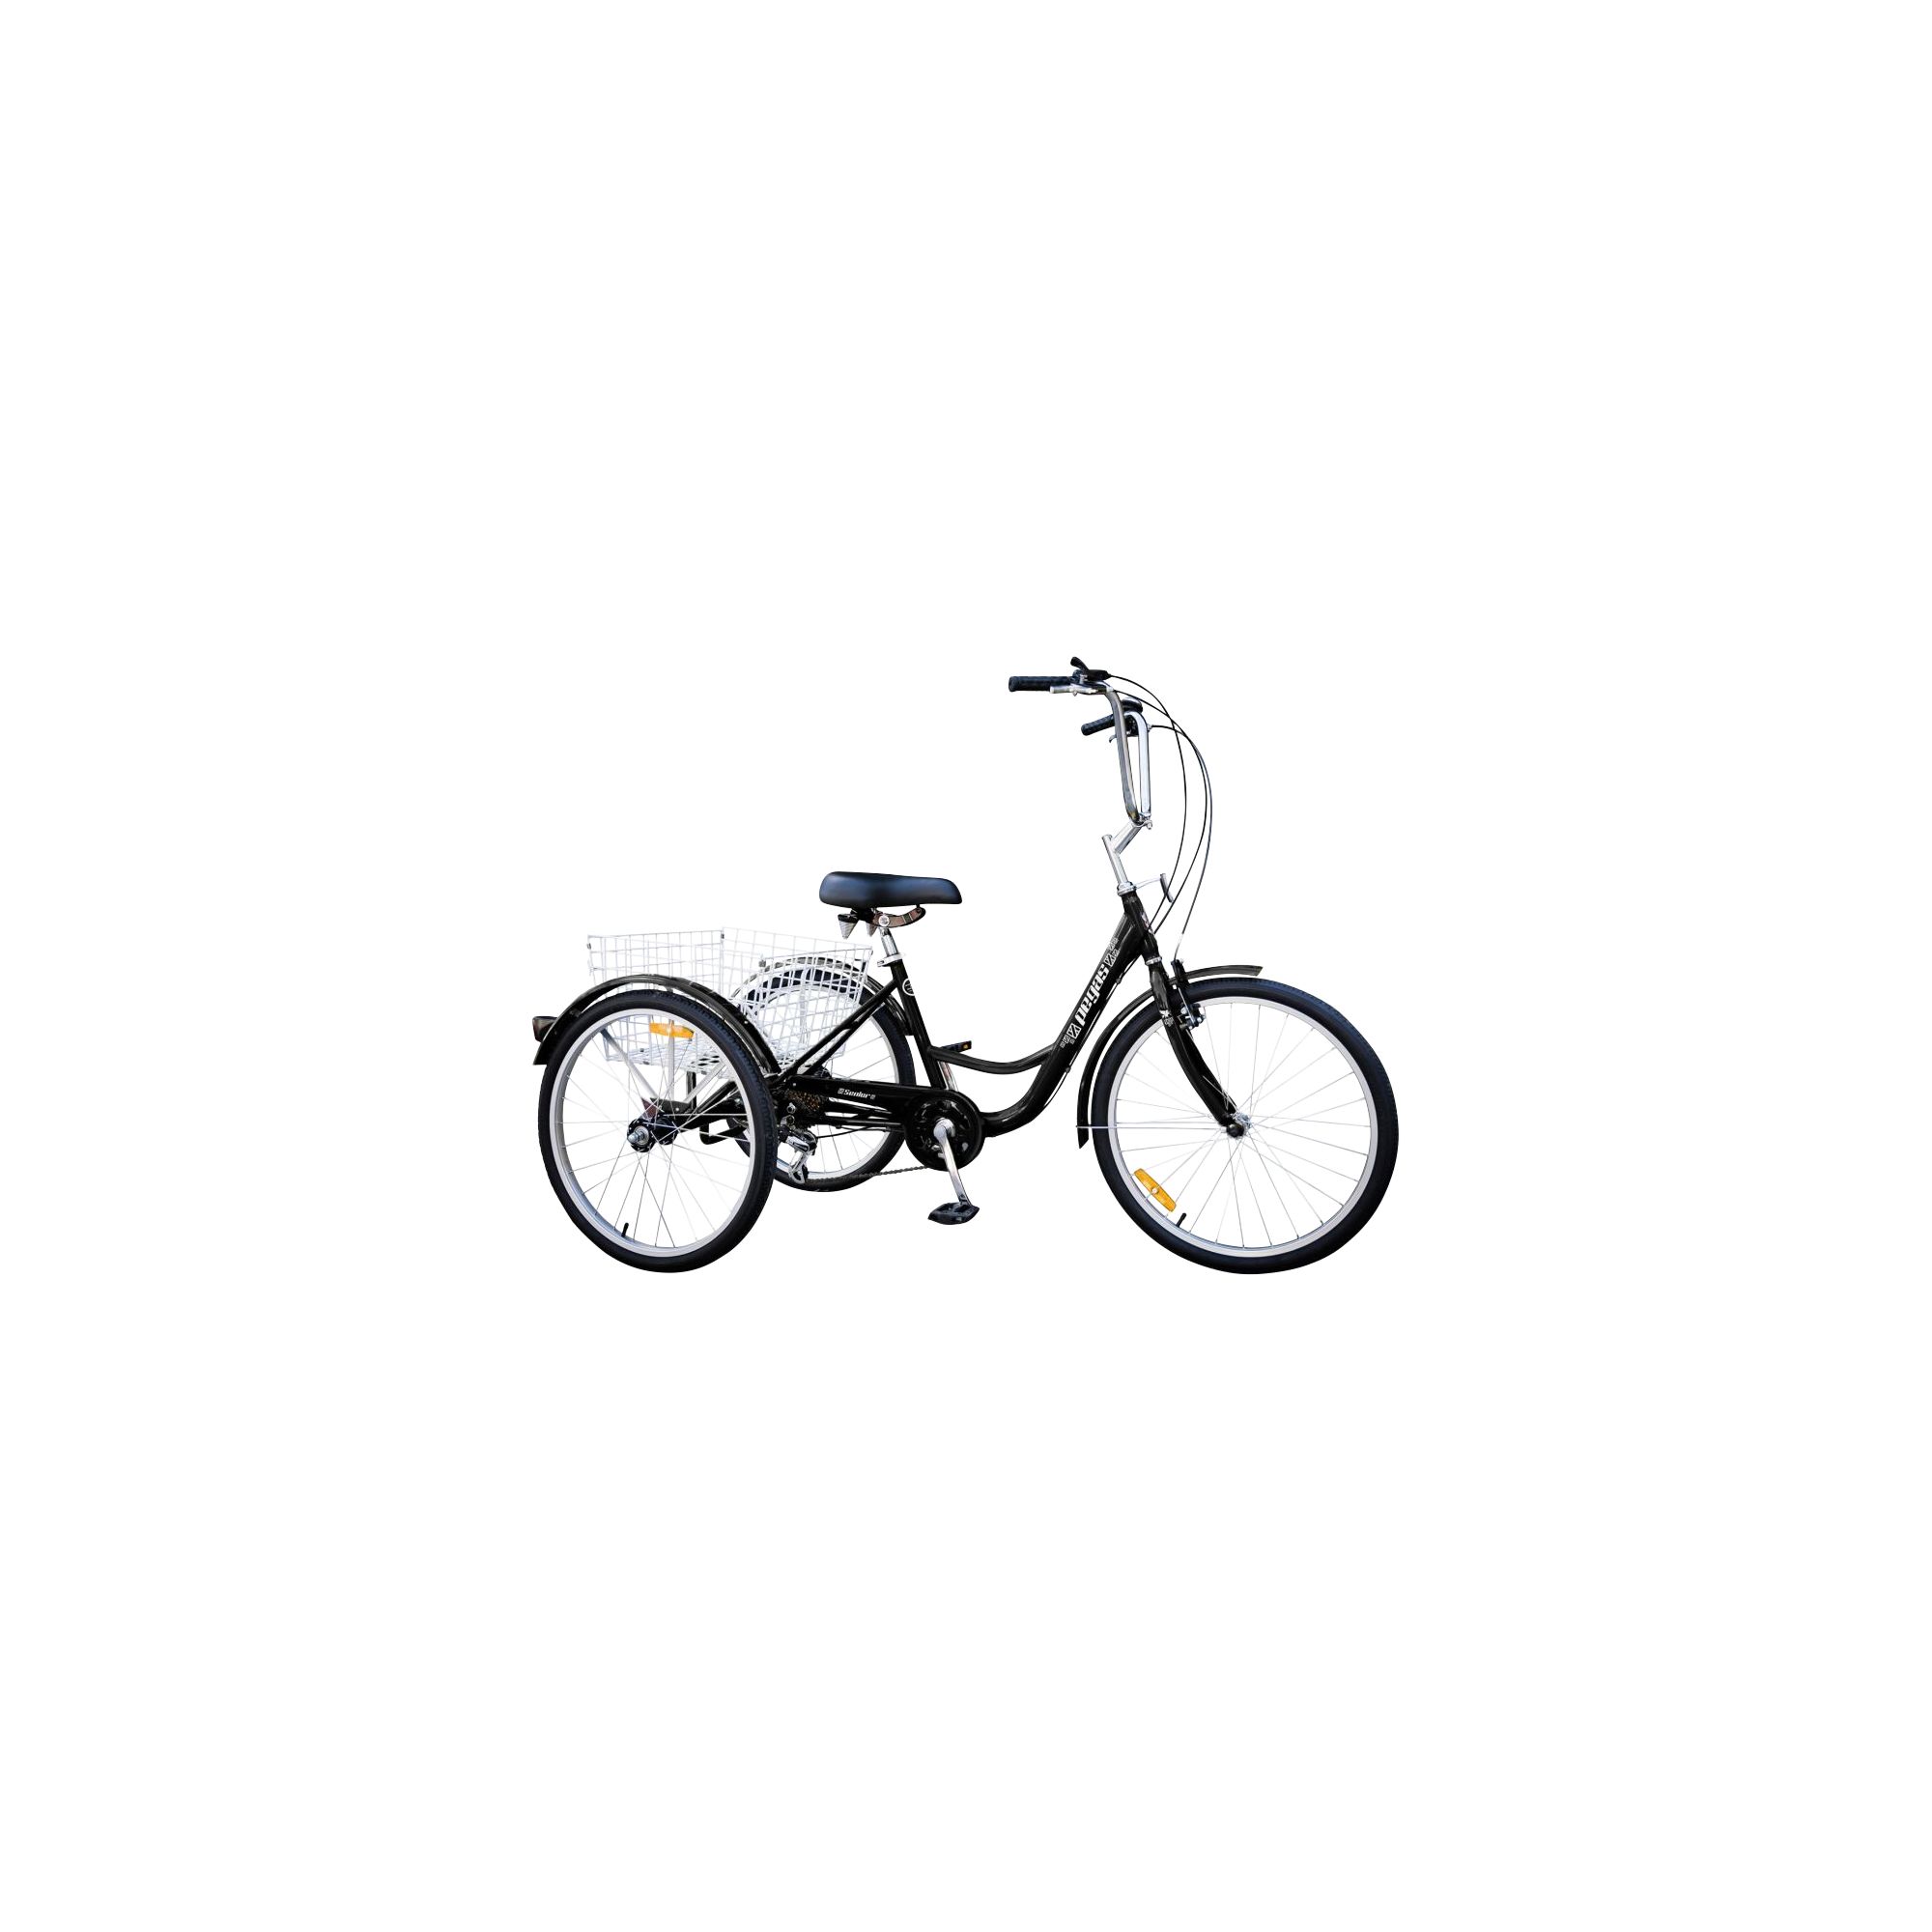 SENIOR 24 inch biciclete Biciclete